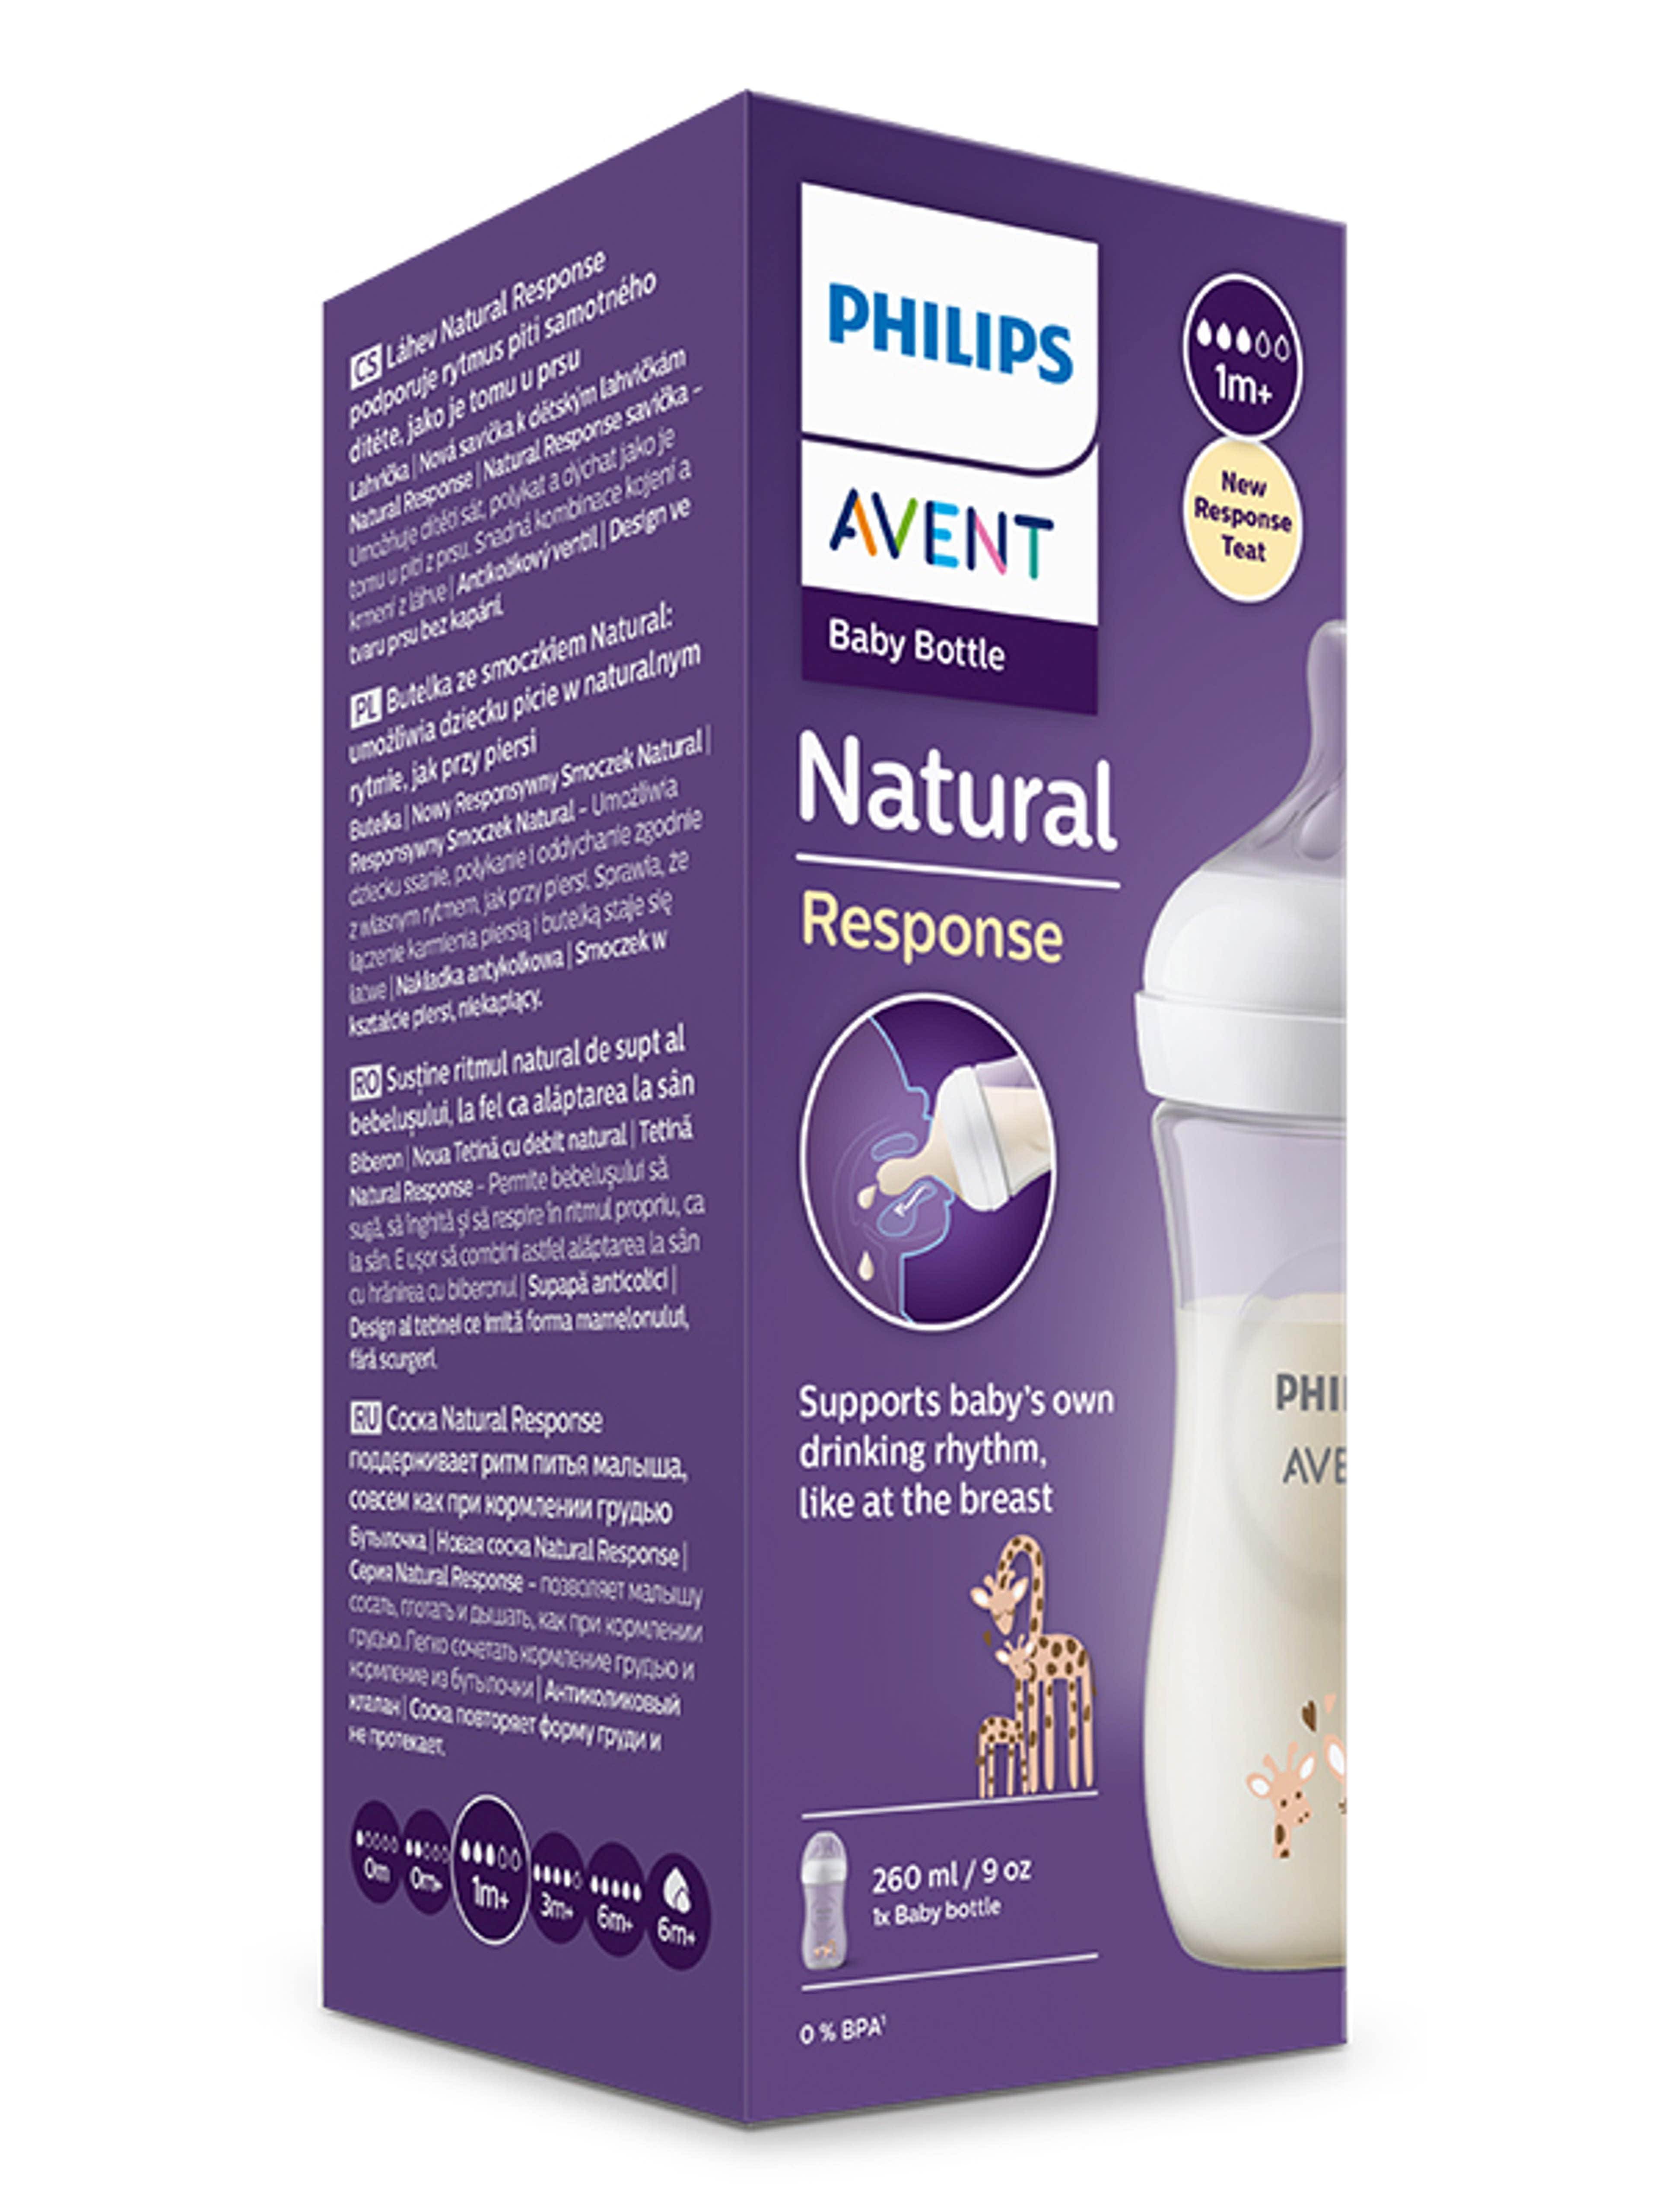 Philips Avent Natural Response cumisüveg 3 hónapos kortól 330 ml - 1 db-3